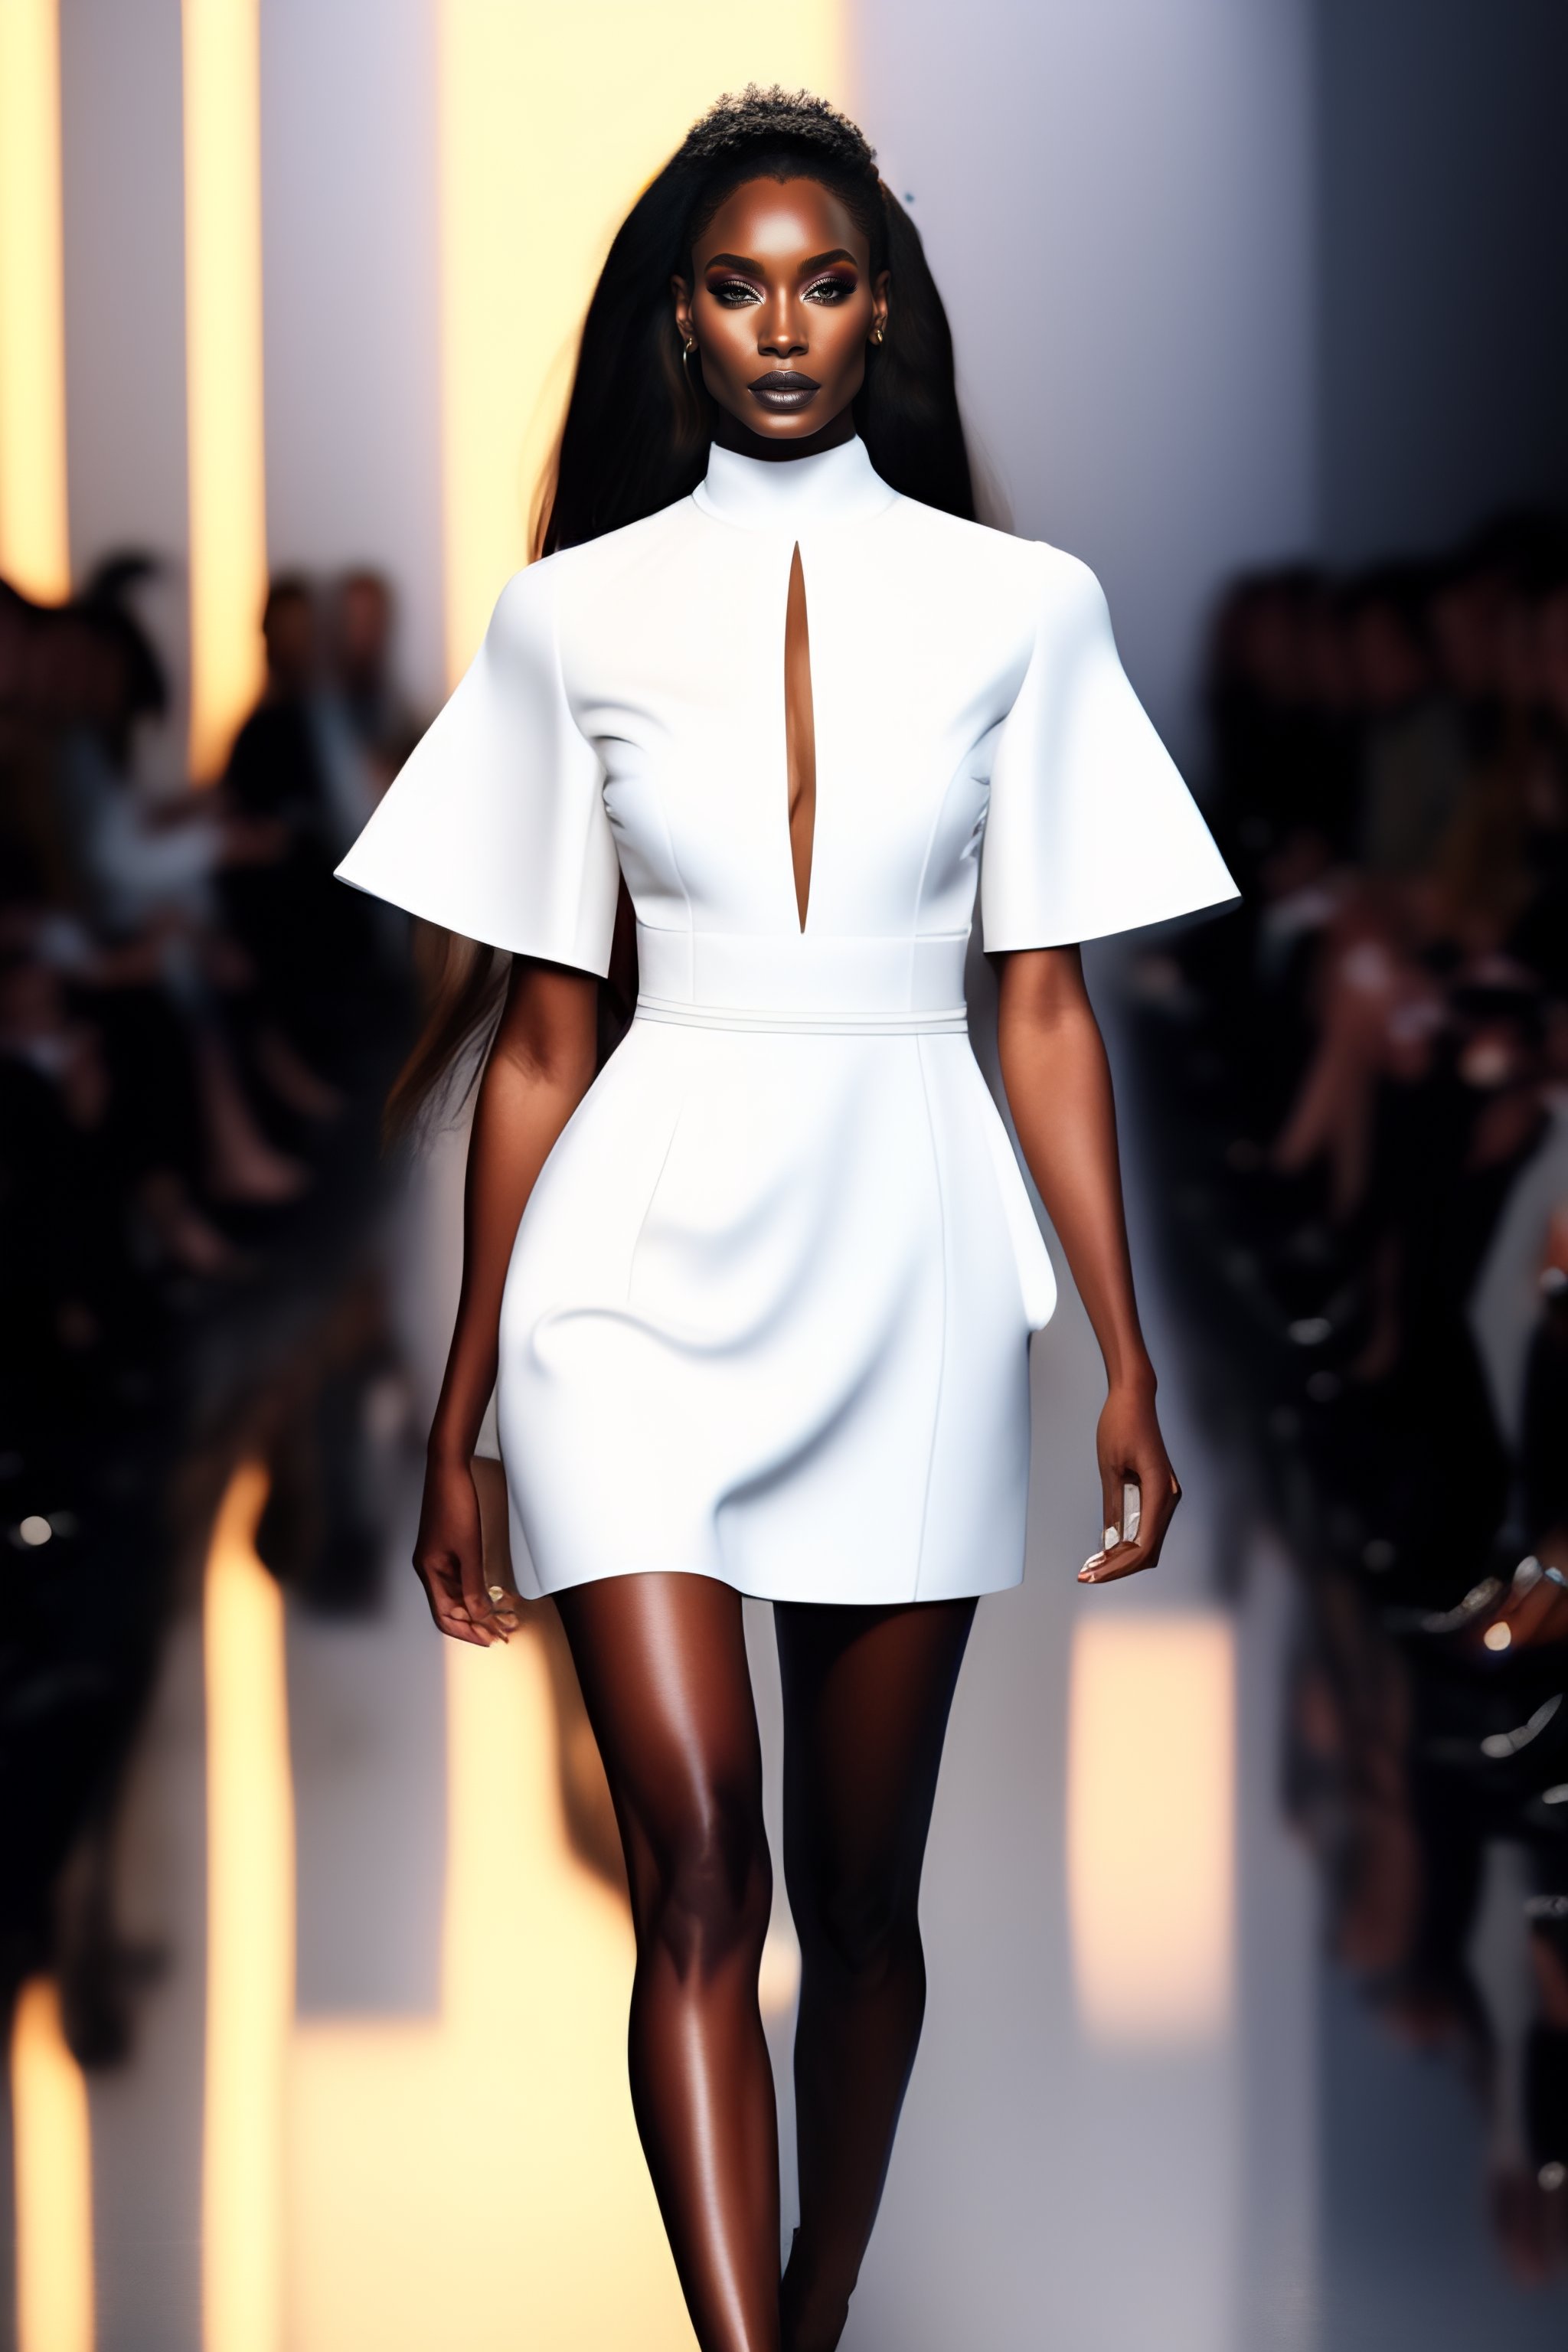 Lexica - Beautiful dress design on white women in new york fashion week ...